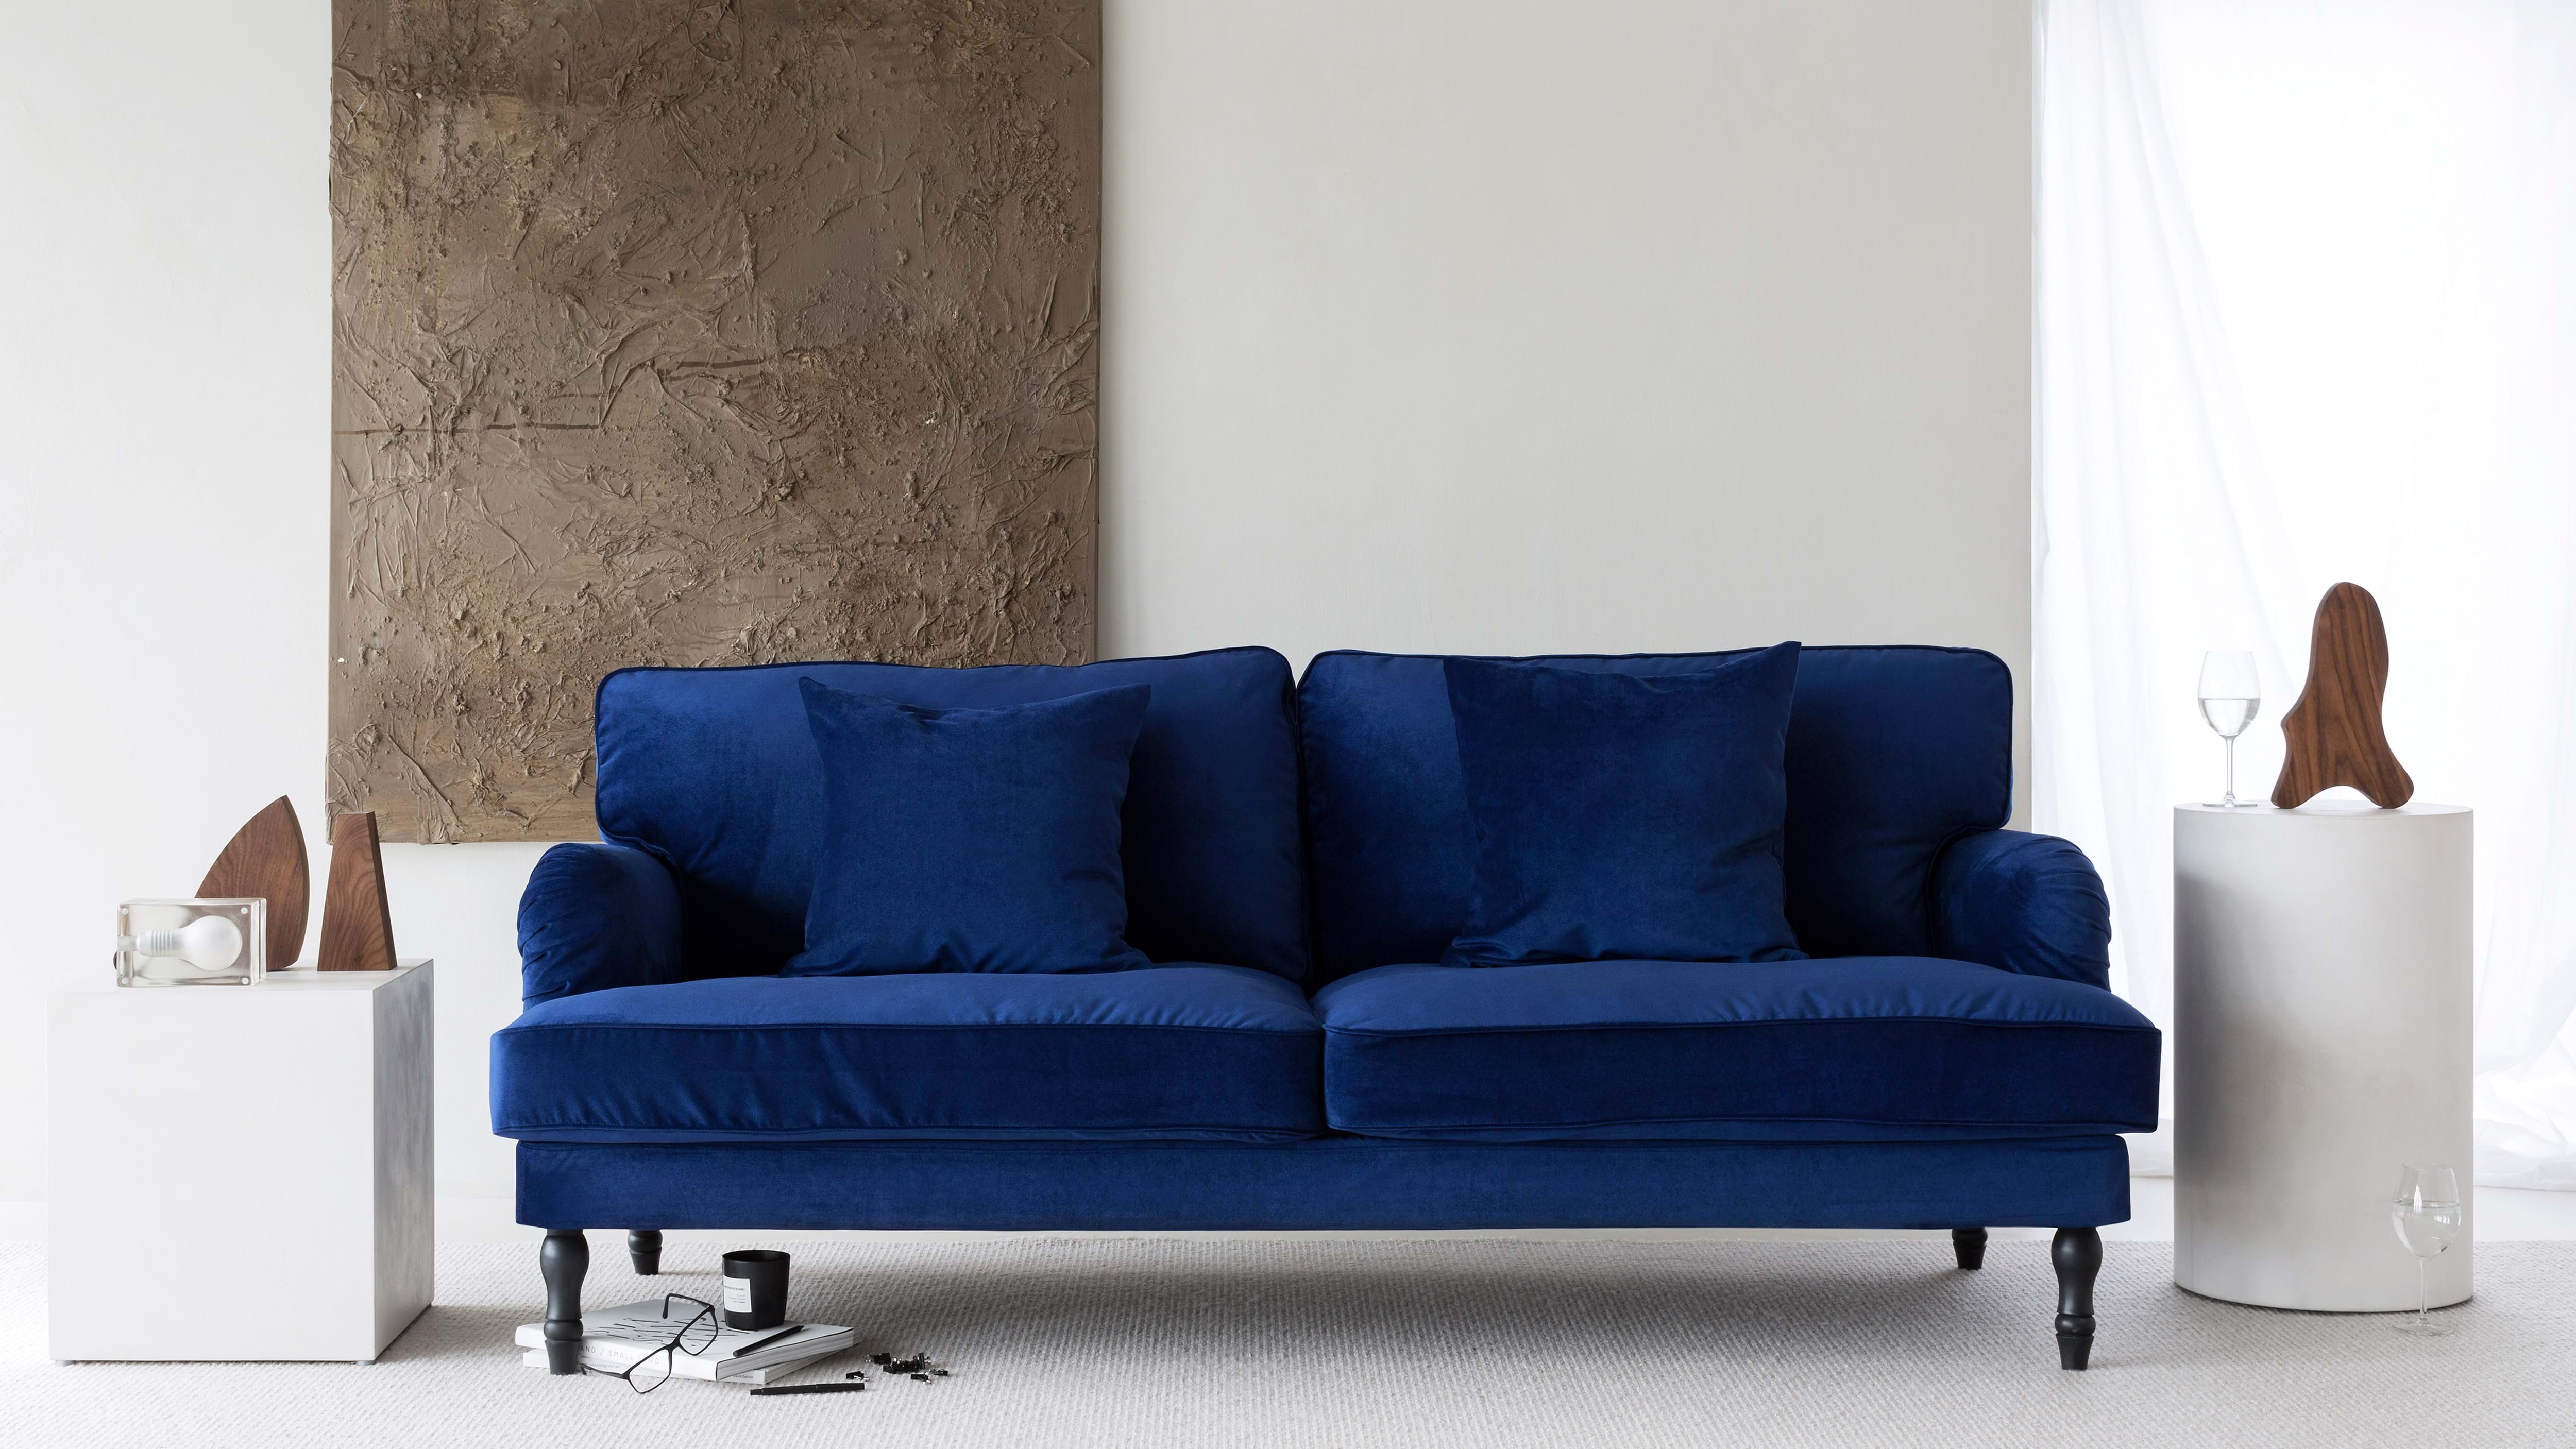 IKEA Stocksund sofa review by Bemz | Bemz